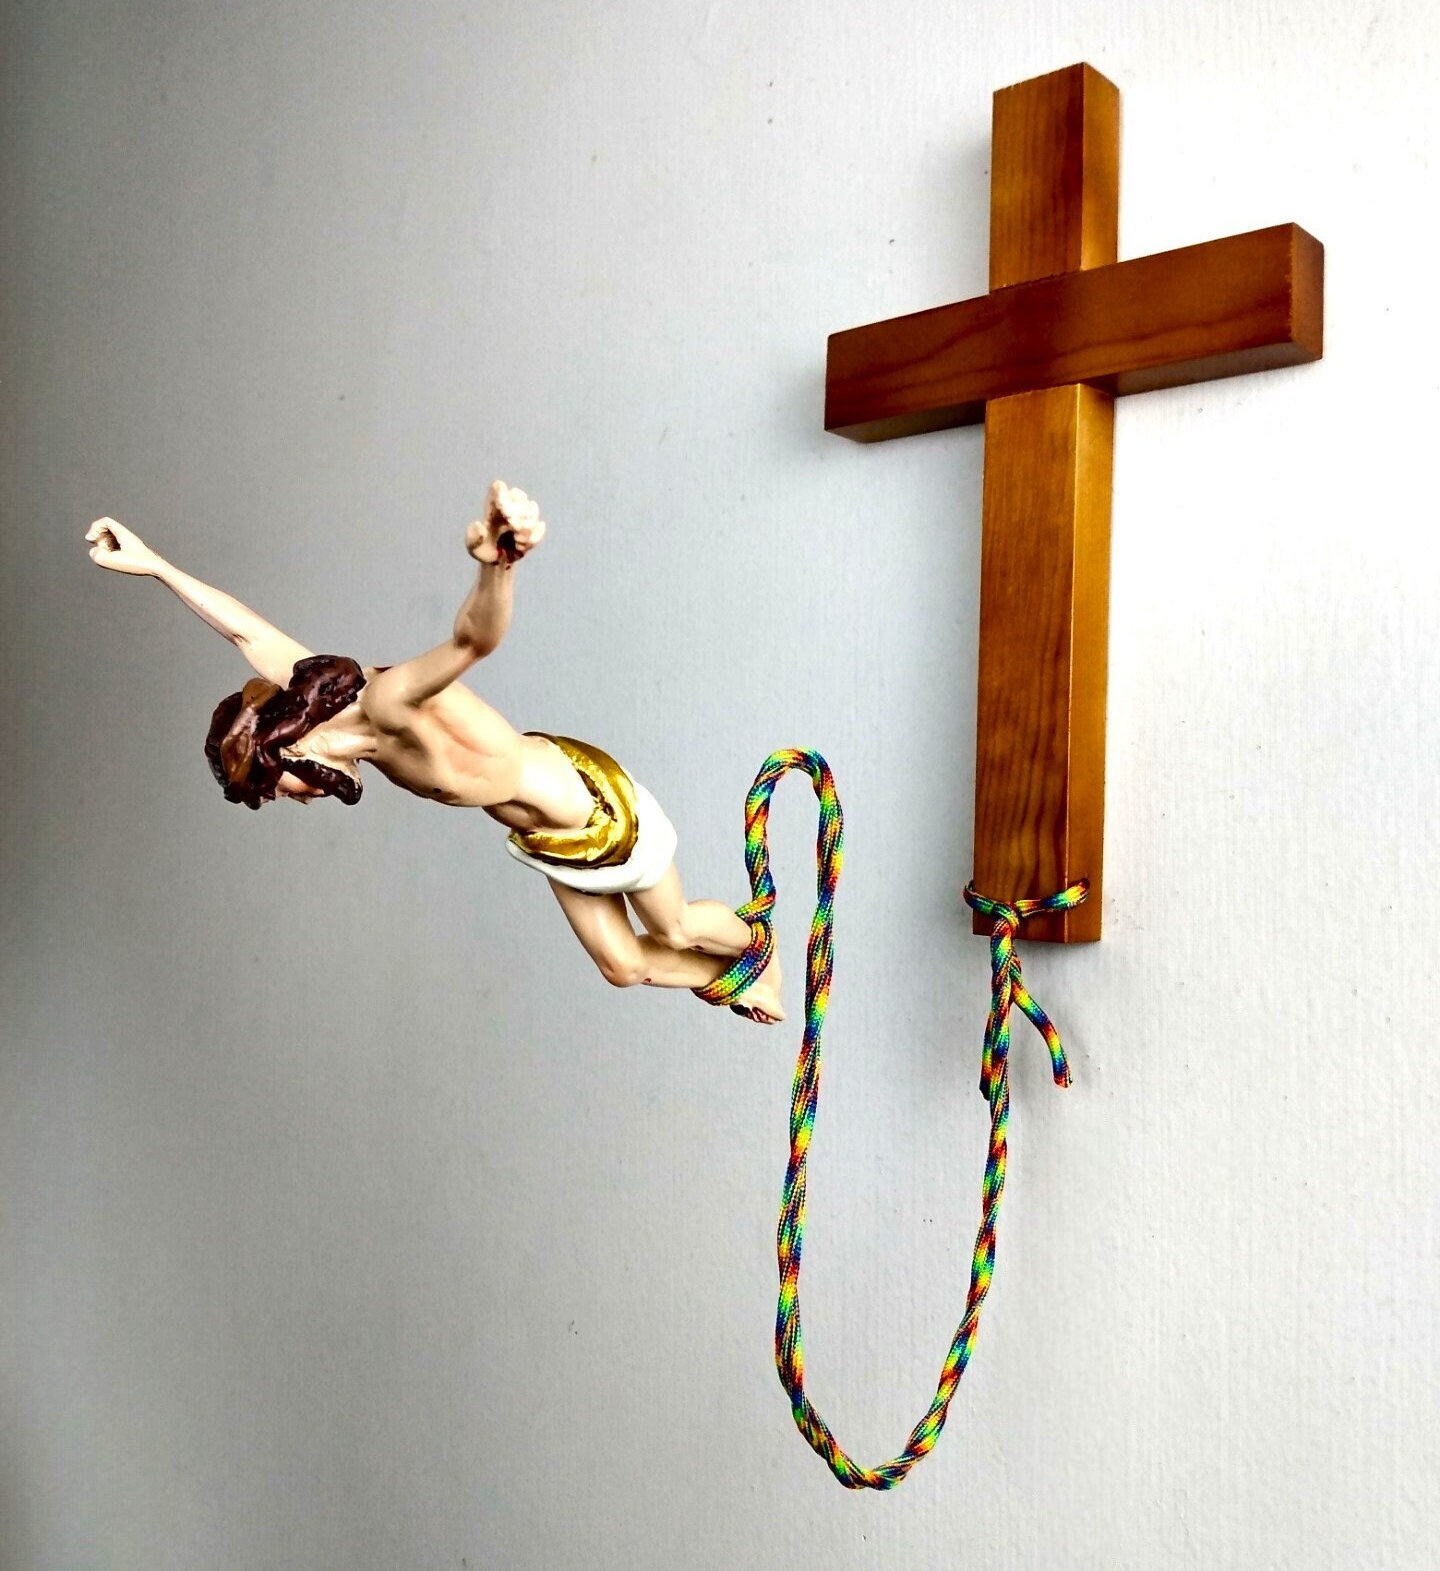 Wall Bungee Jumping Jesus Cross Ornament